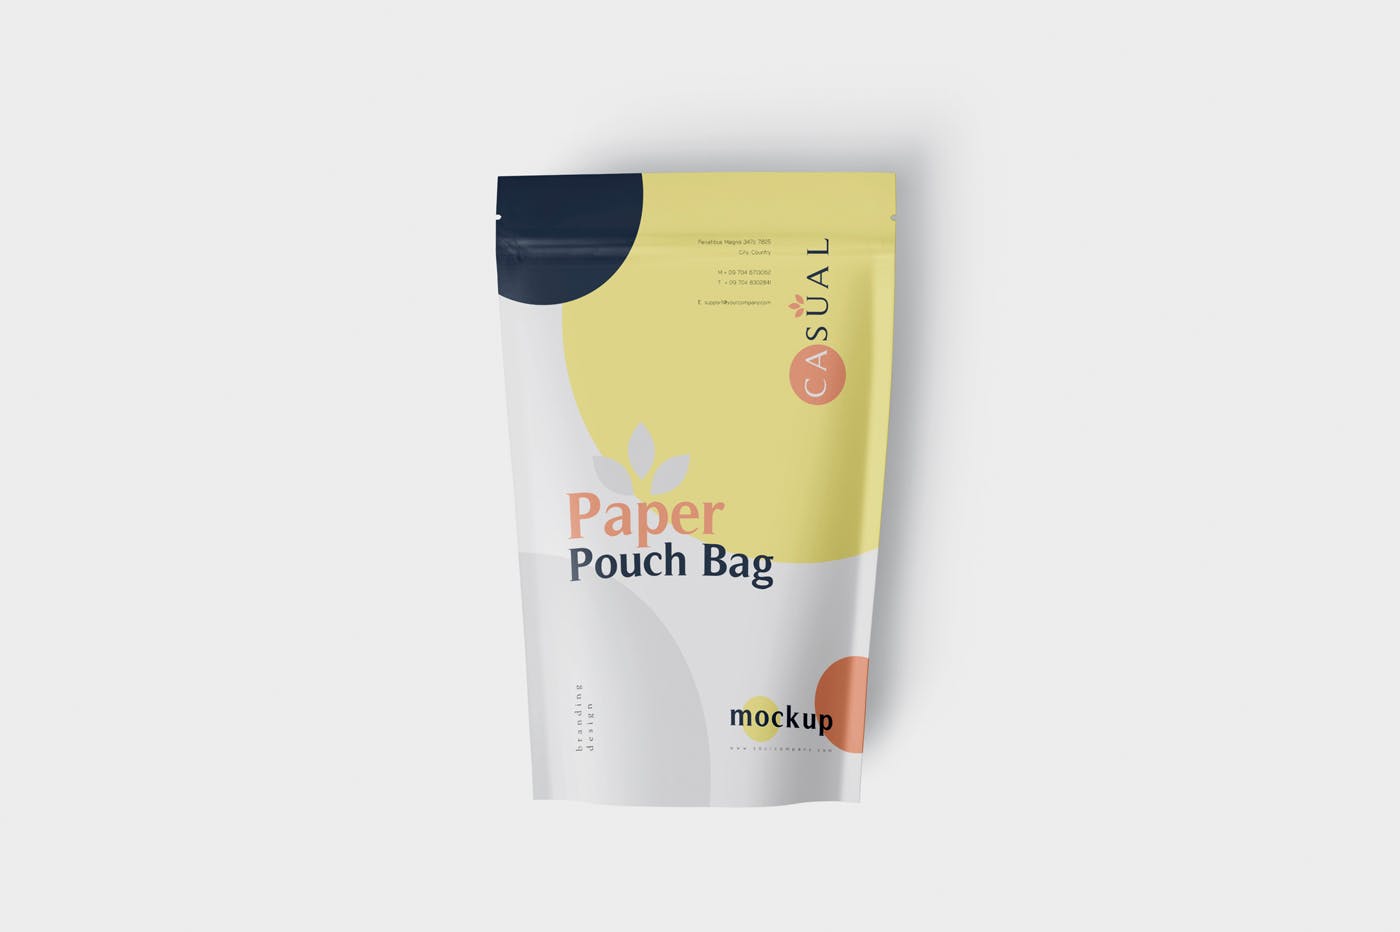 食品自封袋包装设计效果图非凡图库精选 Paper Pouch Bag Mockup – Large Size插图(3)